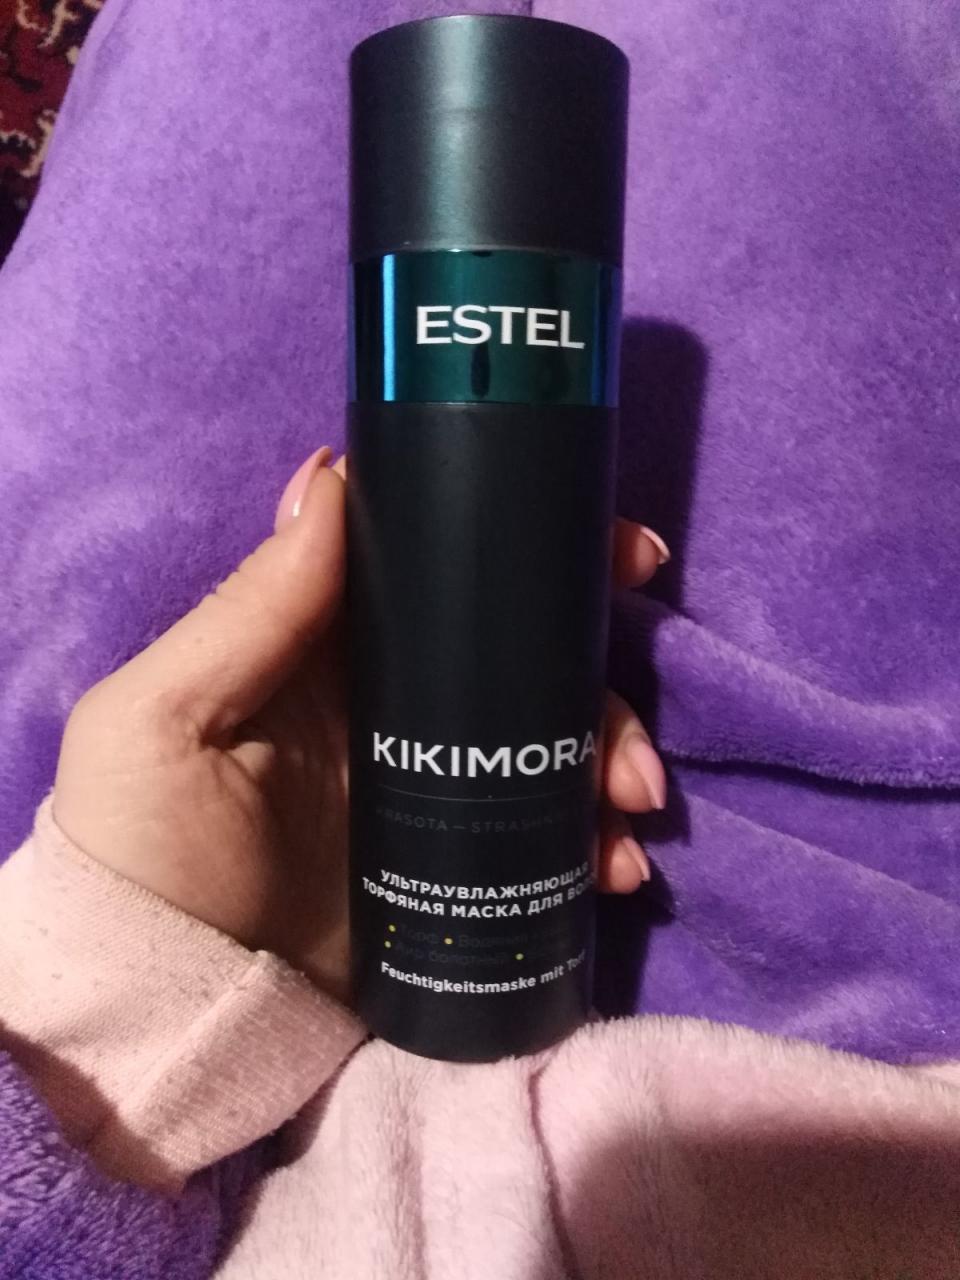 Отзыв на товар: Маска ультраувлажняющая торфяная для волос Kikimora. Estel Professional.